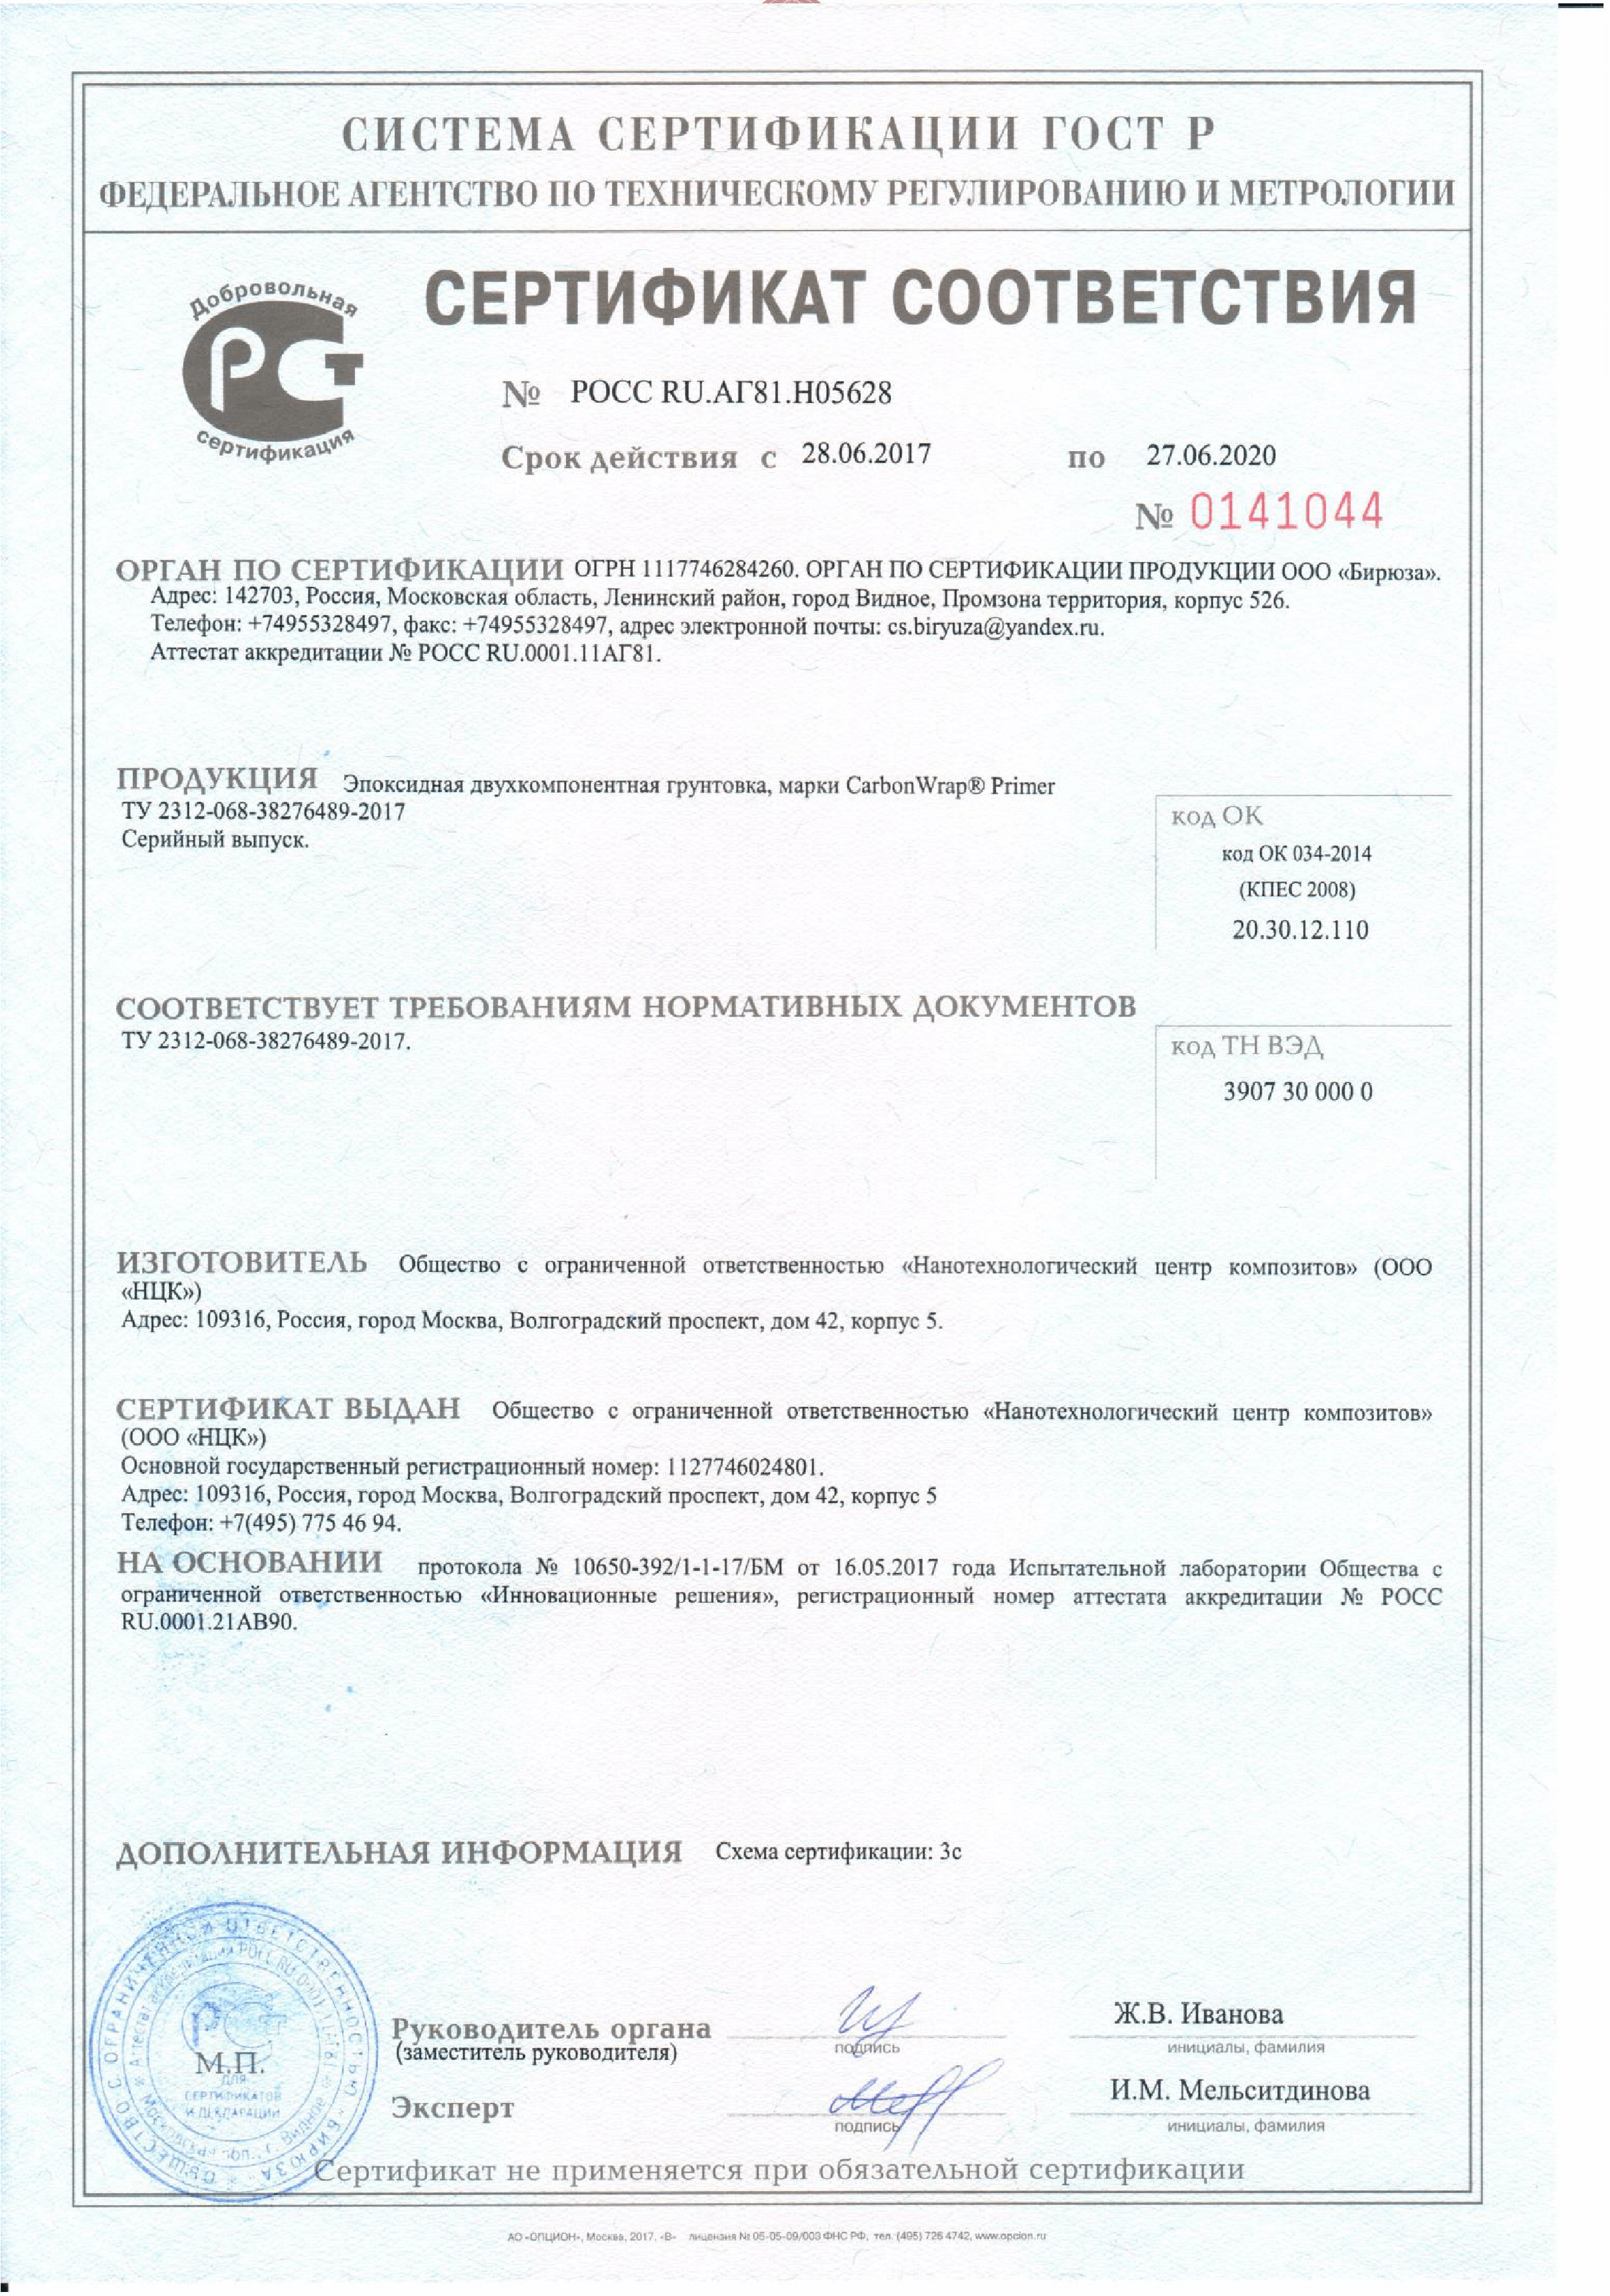 trust-key.ru сертификаты